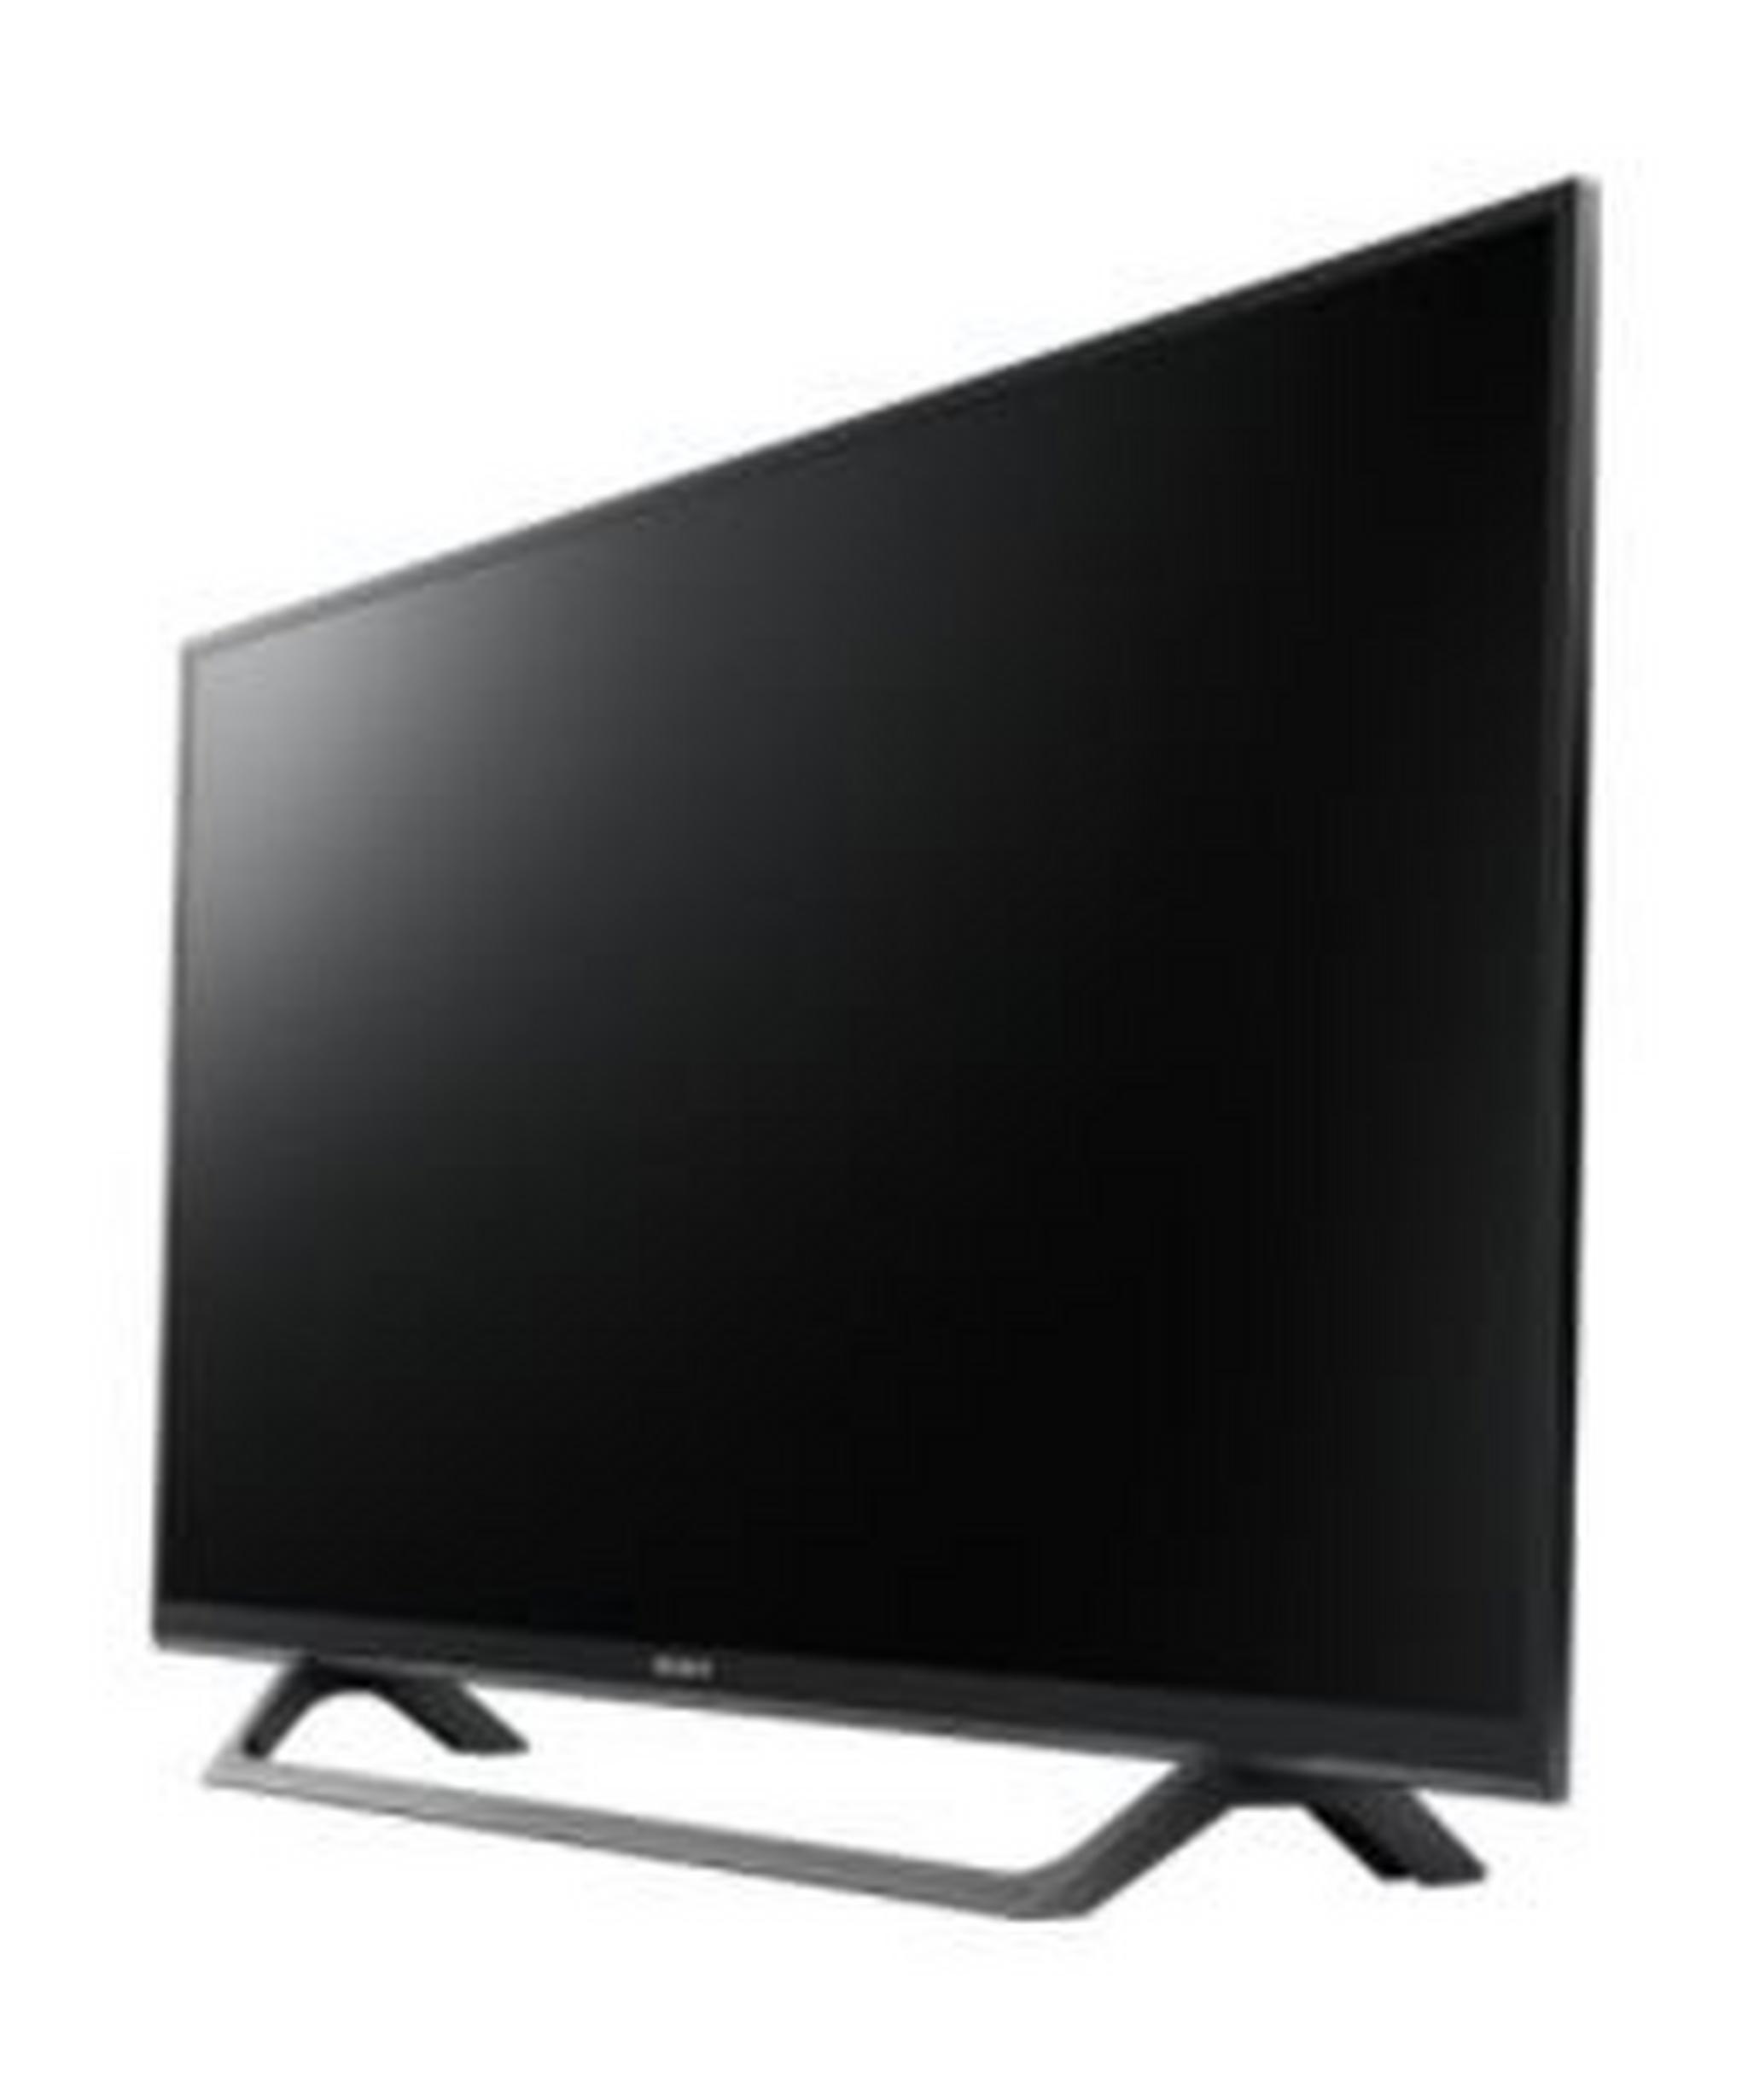 Sony 40-inch FHD Smart Led TV (KDL-40W660E) - Black